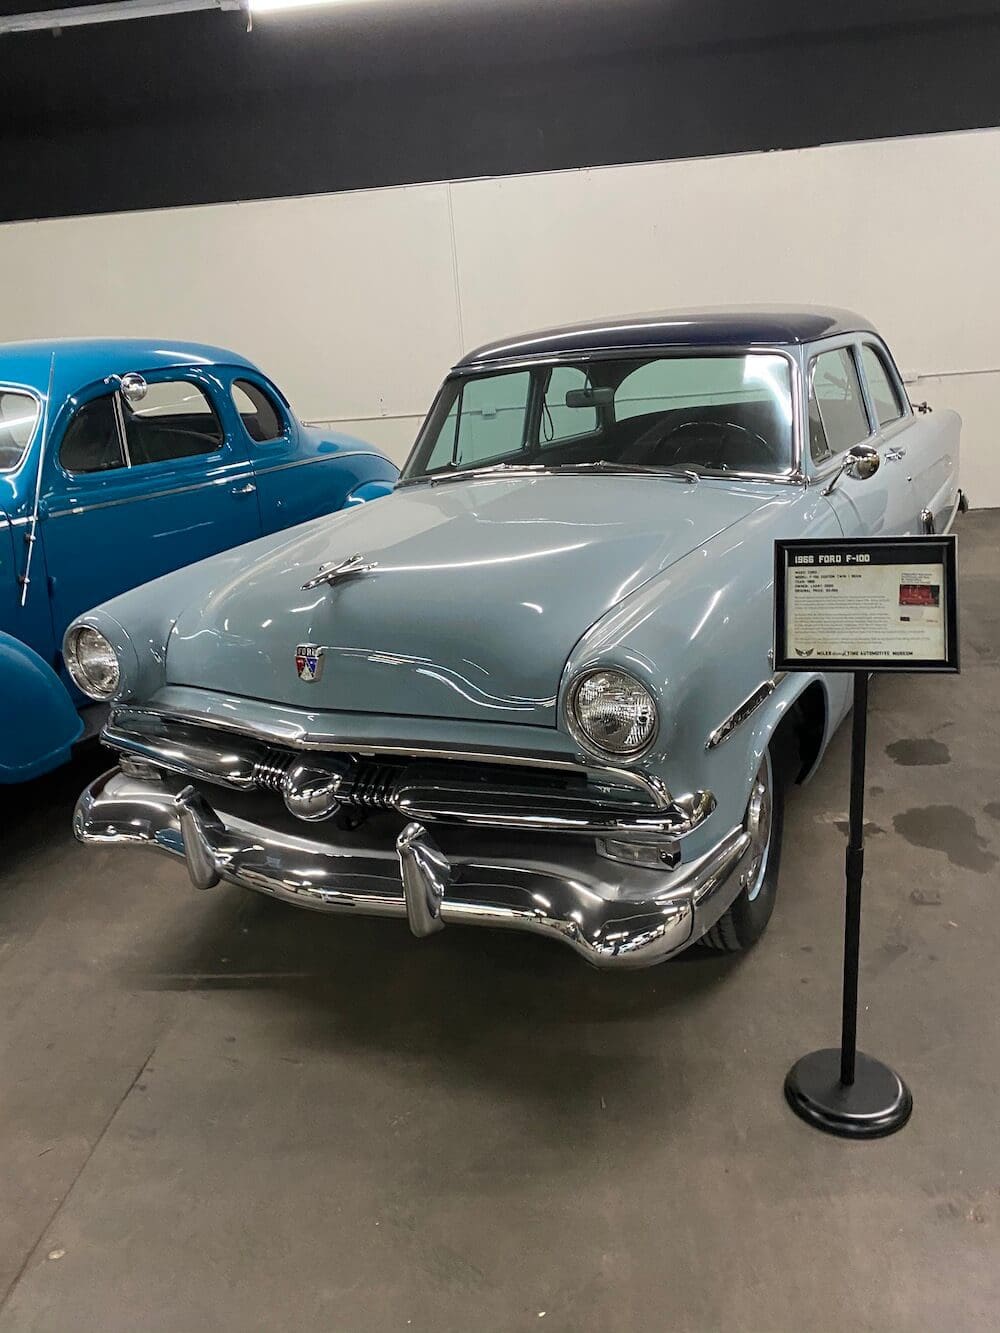 1953 Ford Customline | Miles Through Time